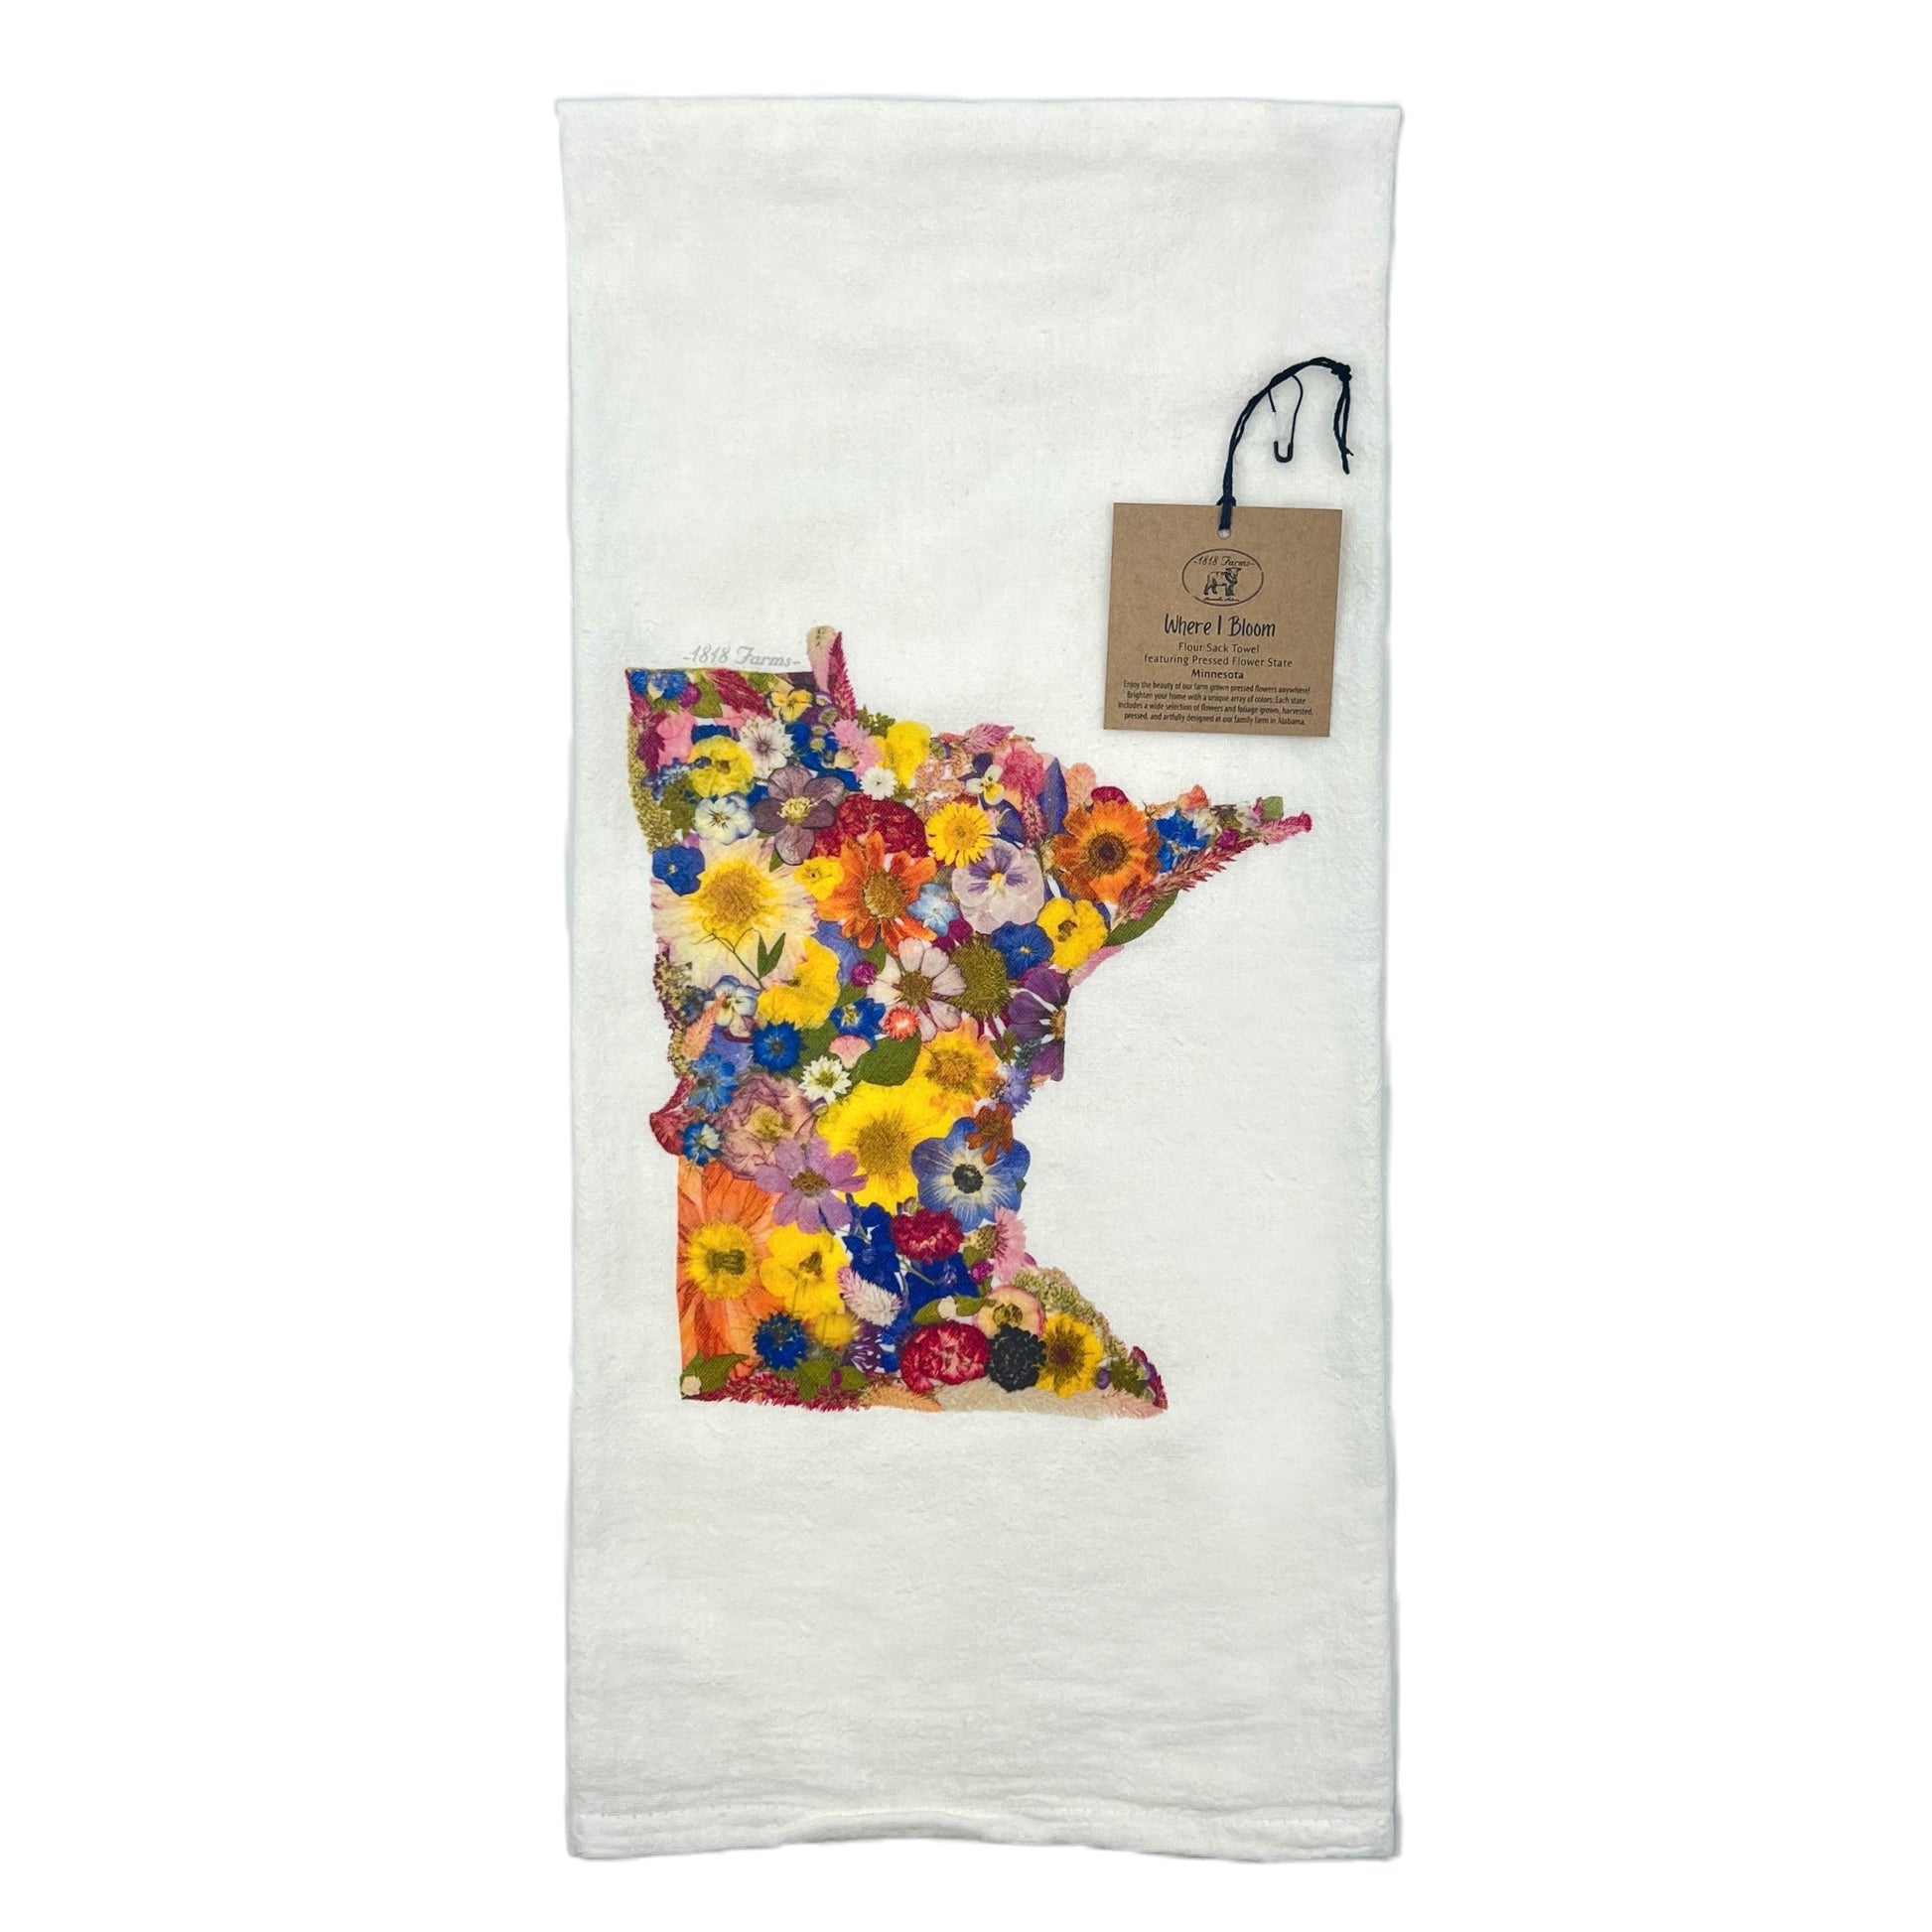 State Themed Flour Sack Towel  - "Where I Bloom" Collection Towel 1818 Farms Minnesota  